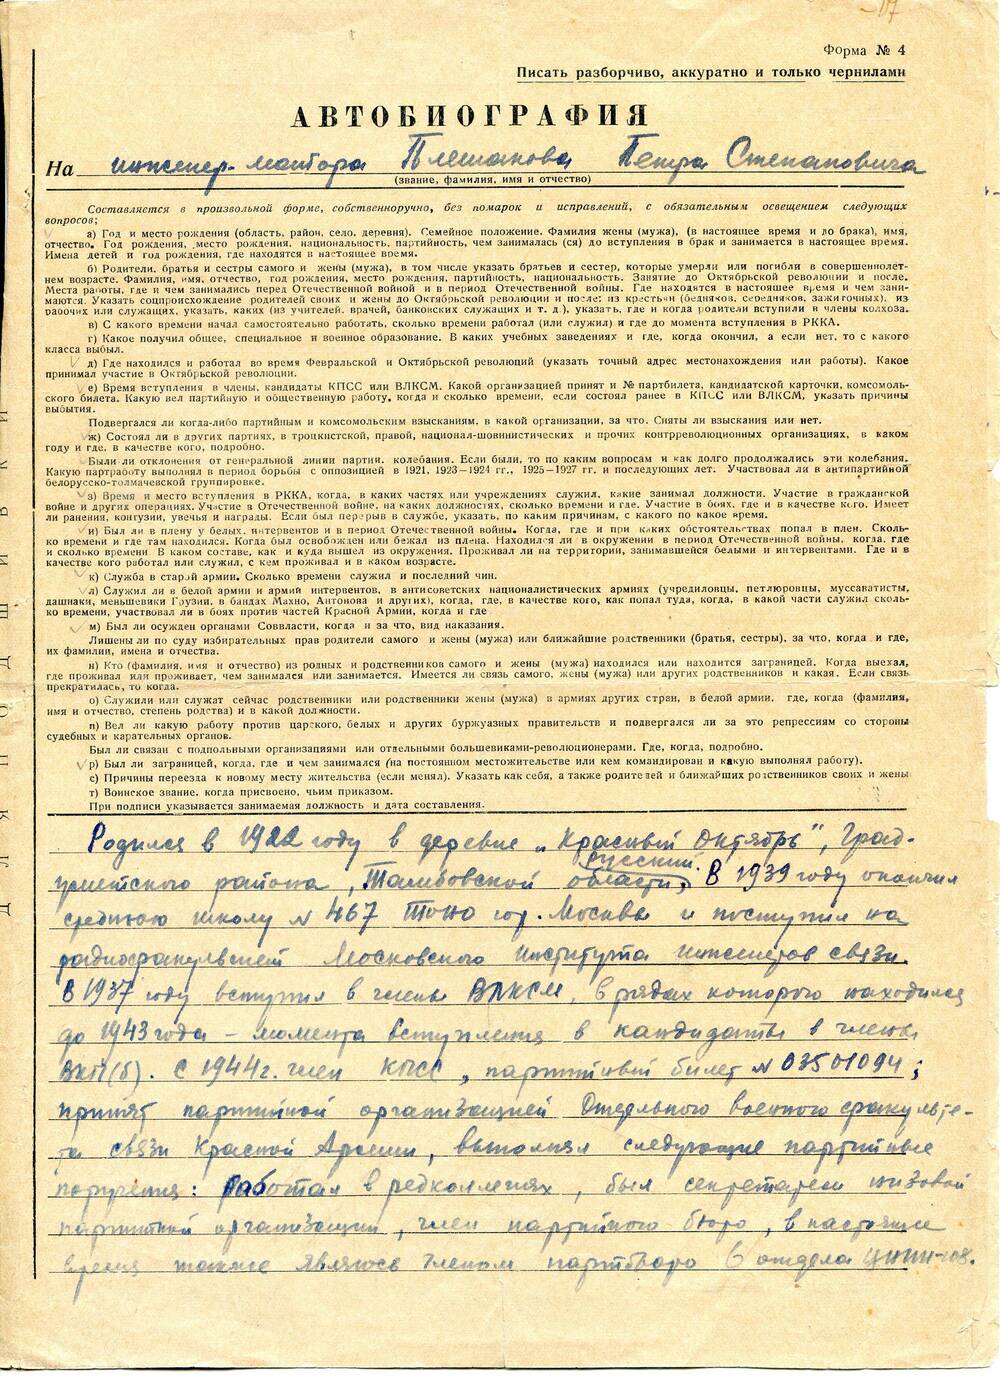 Документ. Автобиография П.С.Плешакова на 2-х листах. 1955 год.